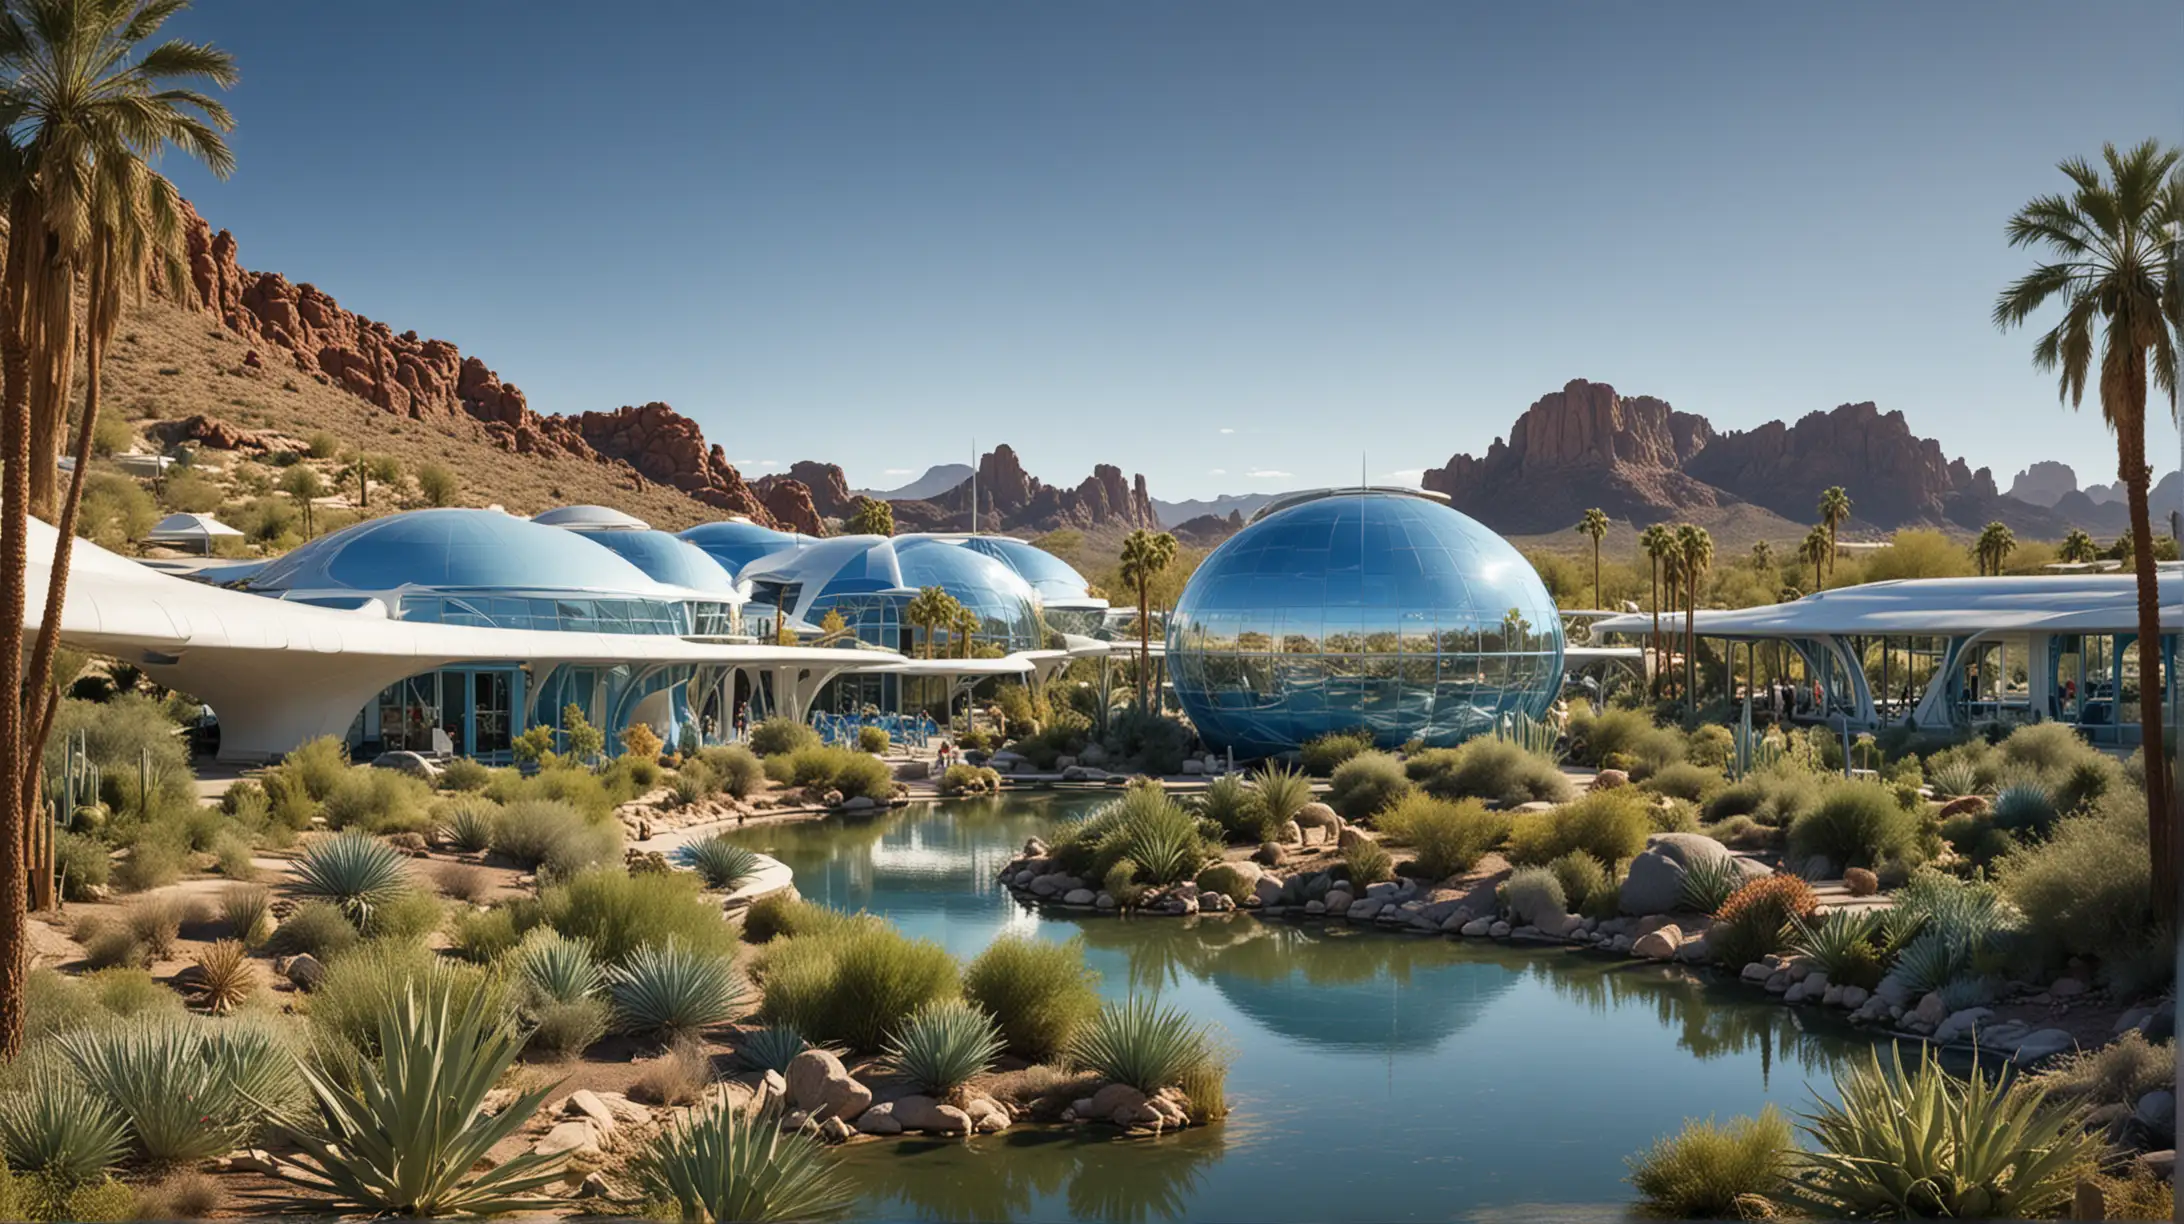 Futuristic Worlds Fair in Southern Arizona Landscape under Clear Blue Sky